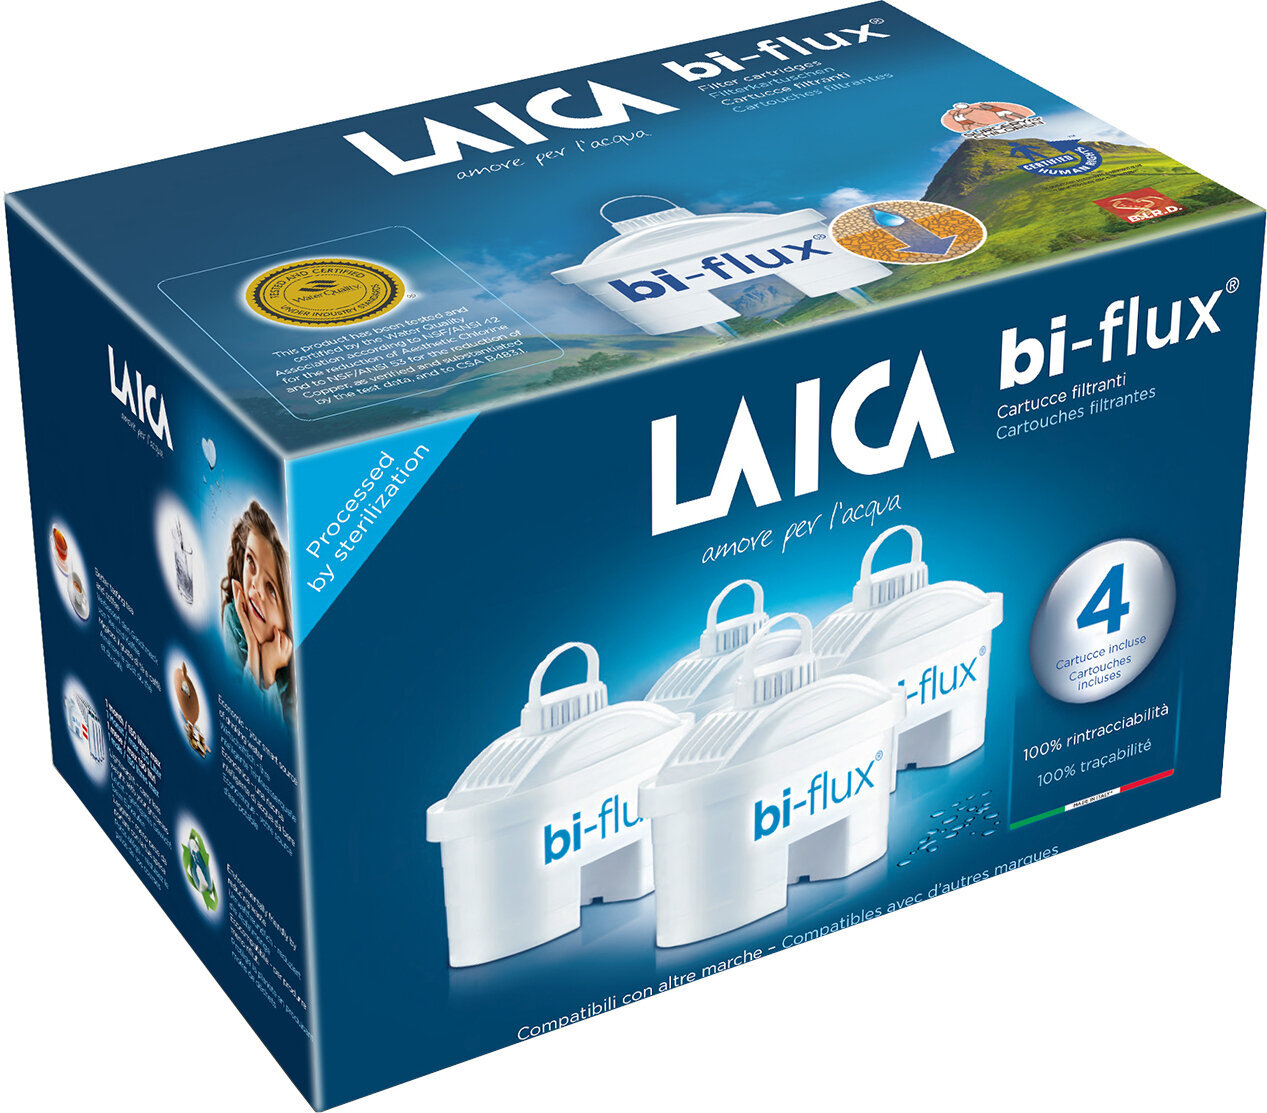 Filter waterkruik Laica Bi-Flux Cartridge